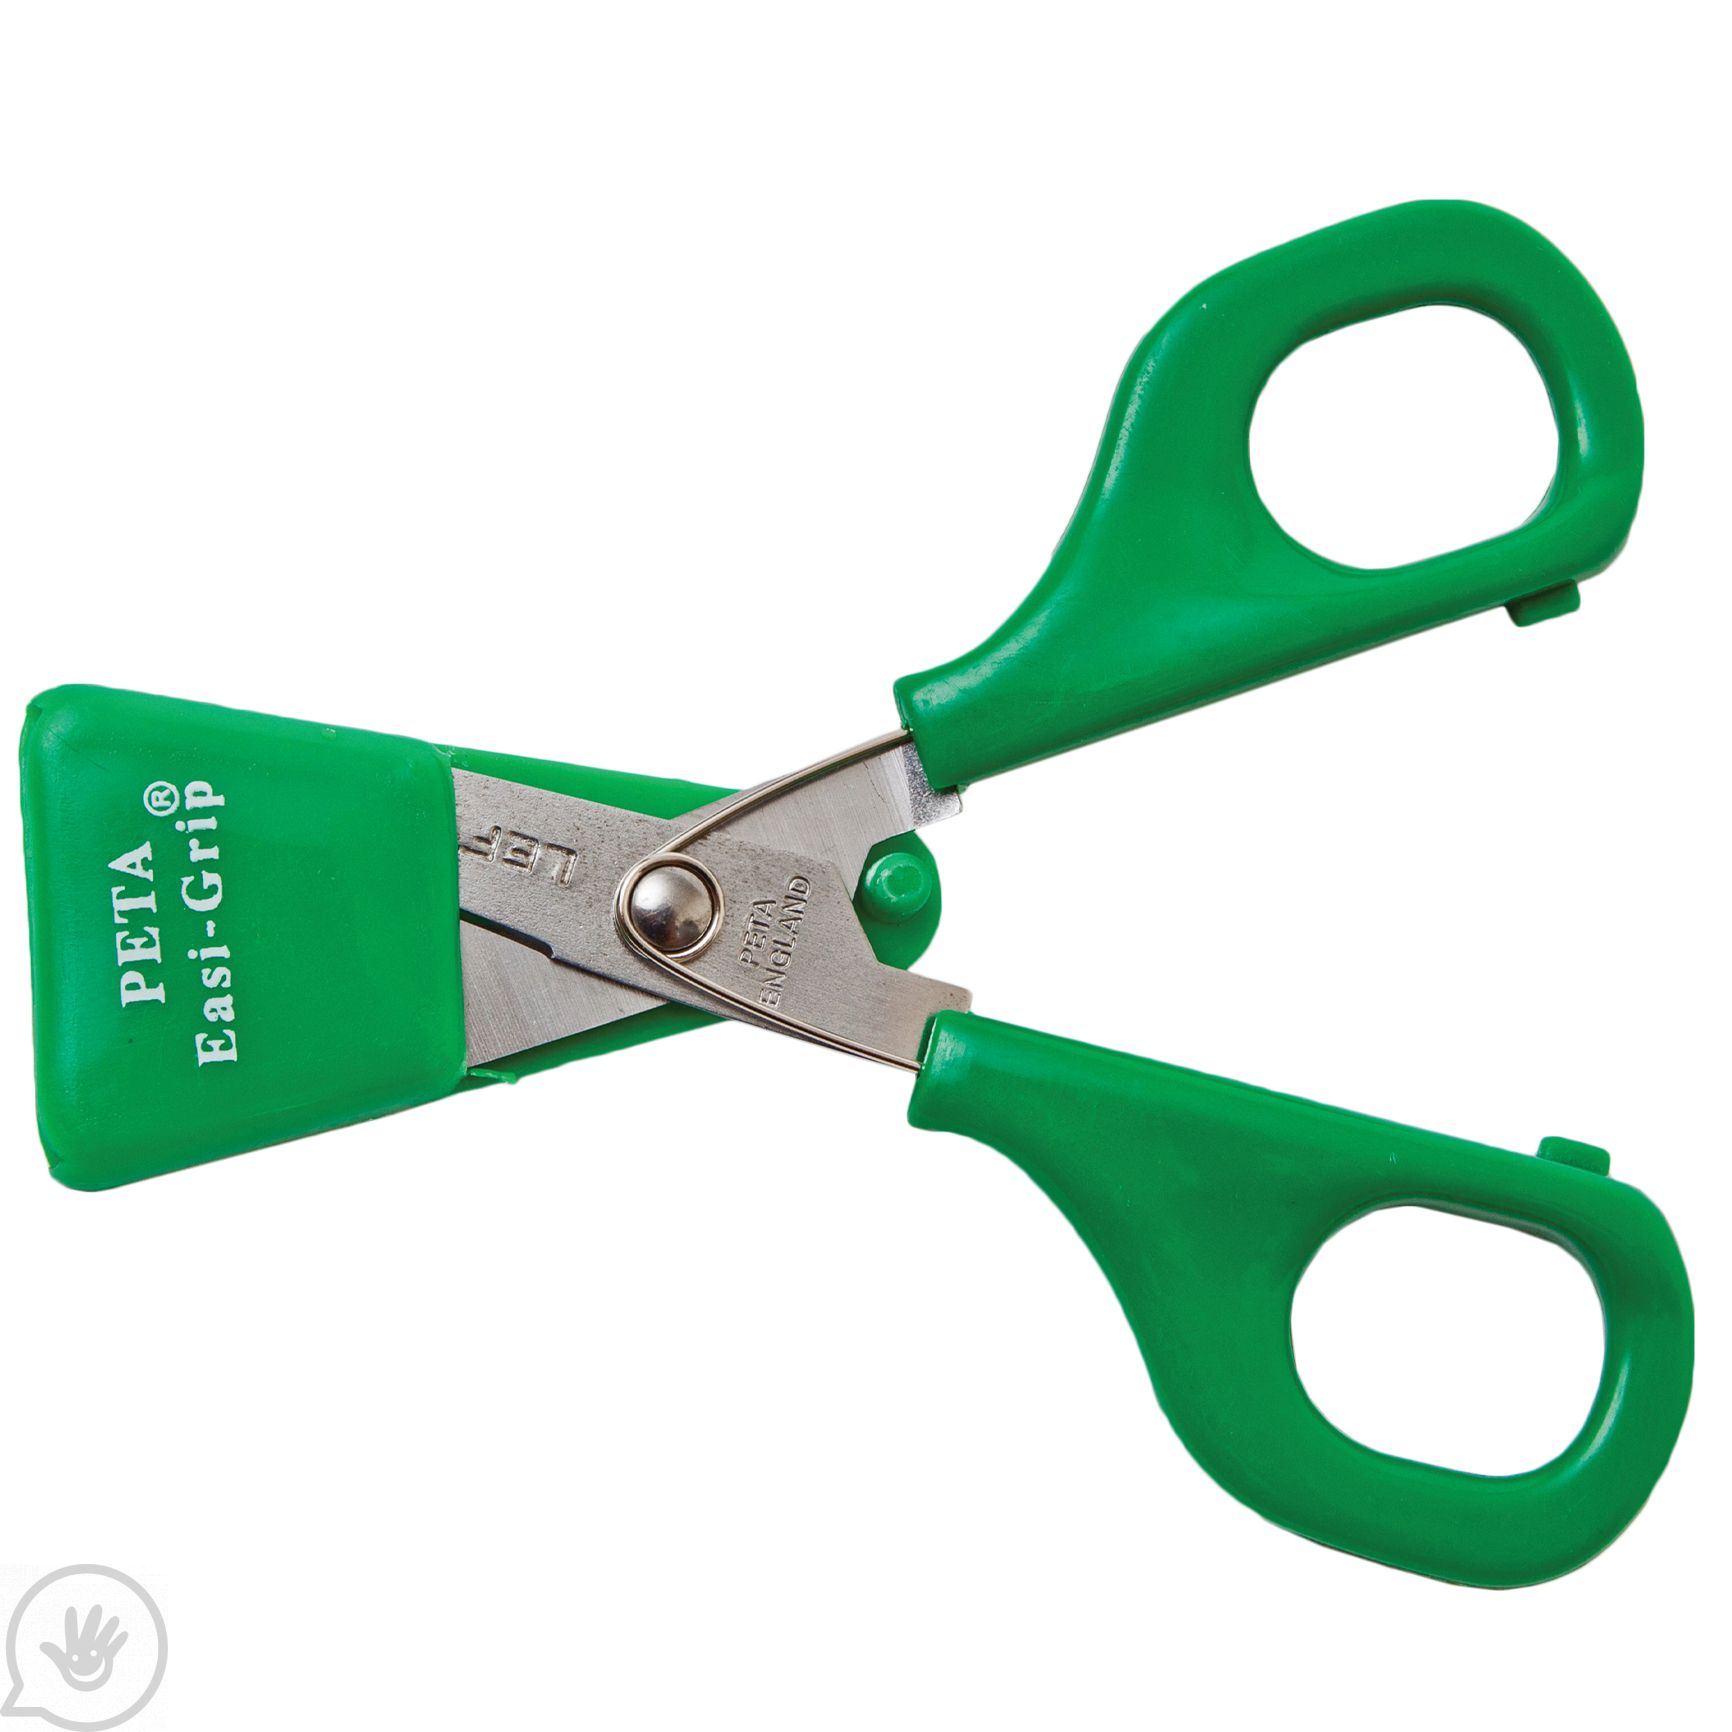 Peta Easi-Grip Child Self Opening Scissors : hidden spring scissors